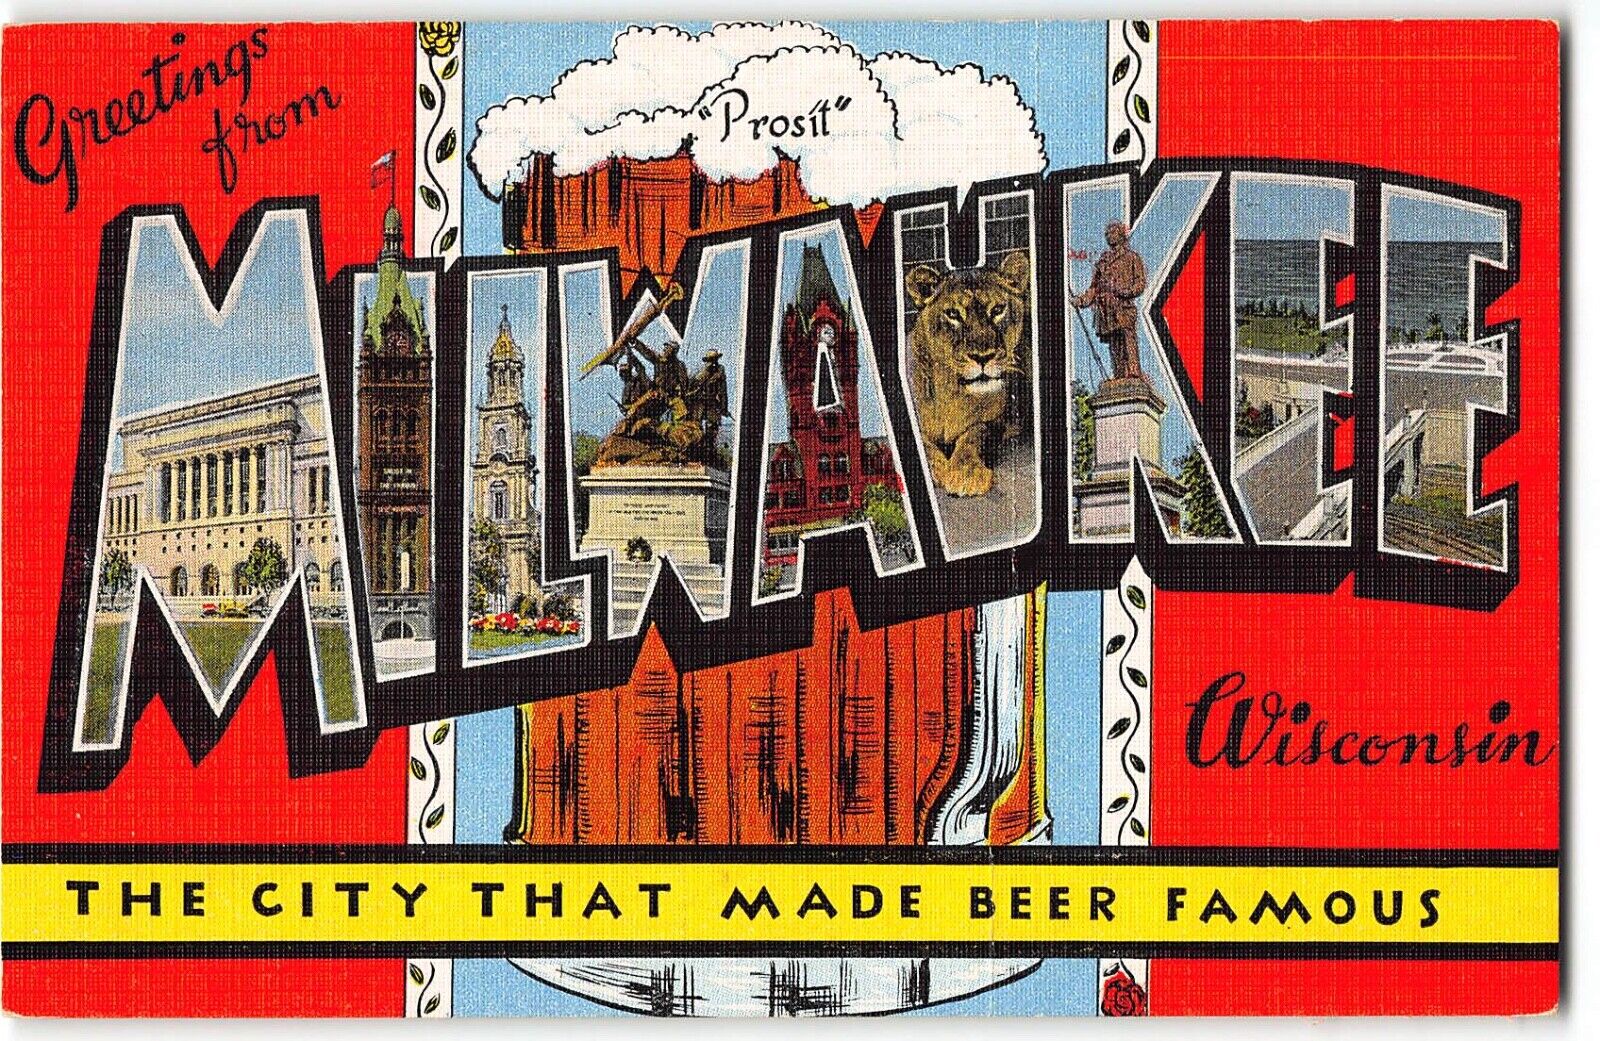 MILWAUKEE, WISCONSIN Large Letter Linen Postcard c1940 - BIg Beer Stein